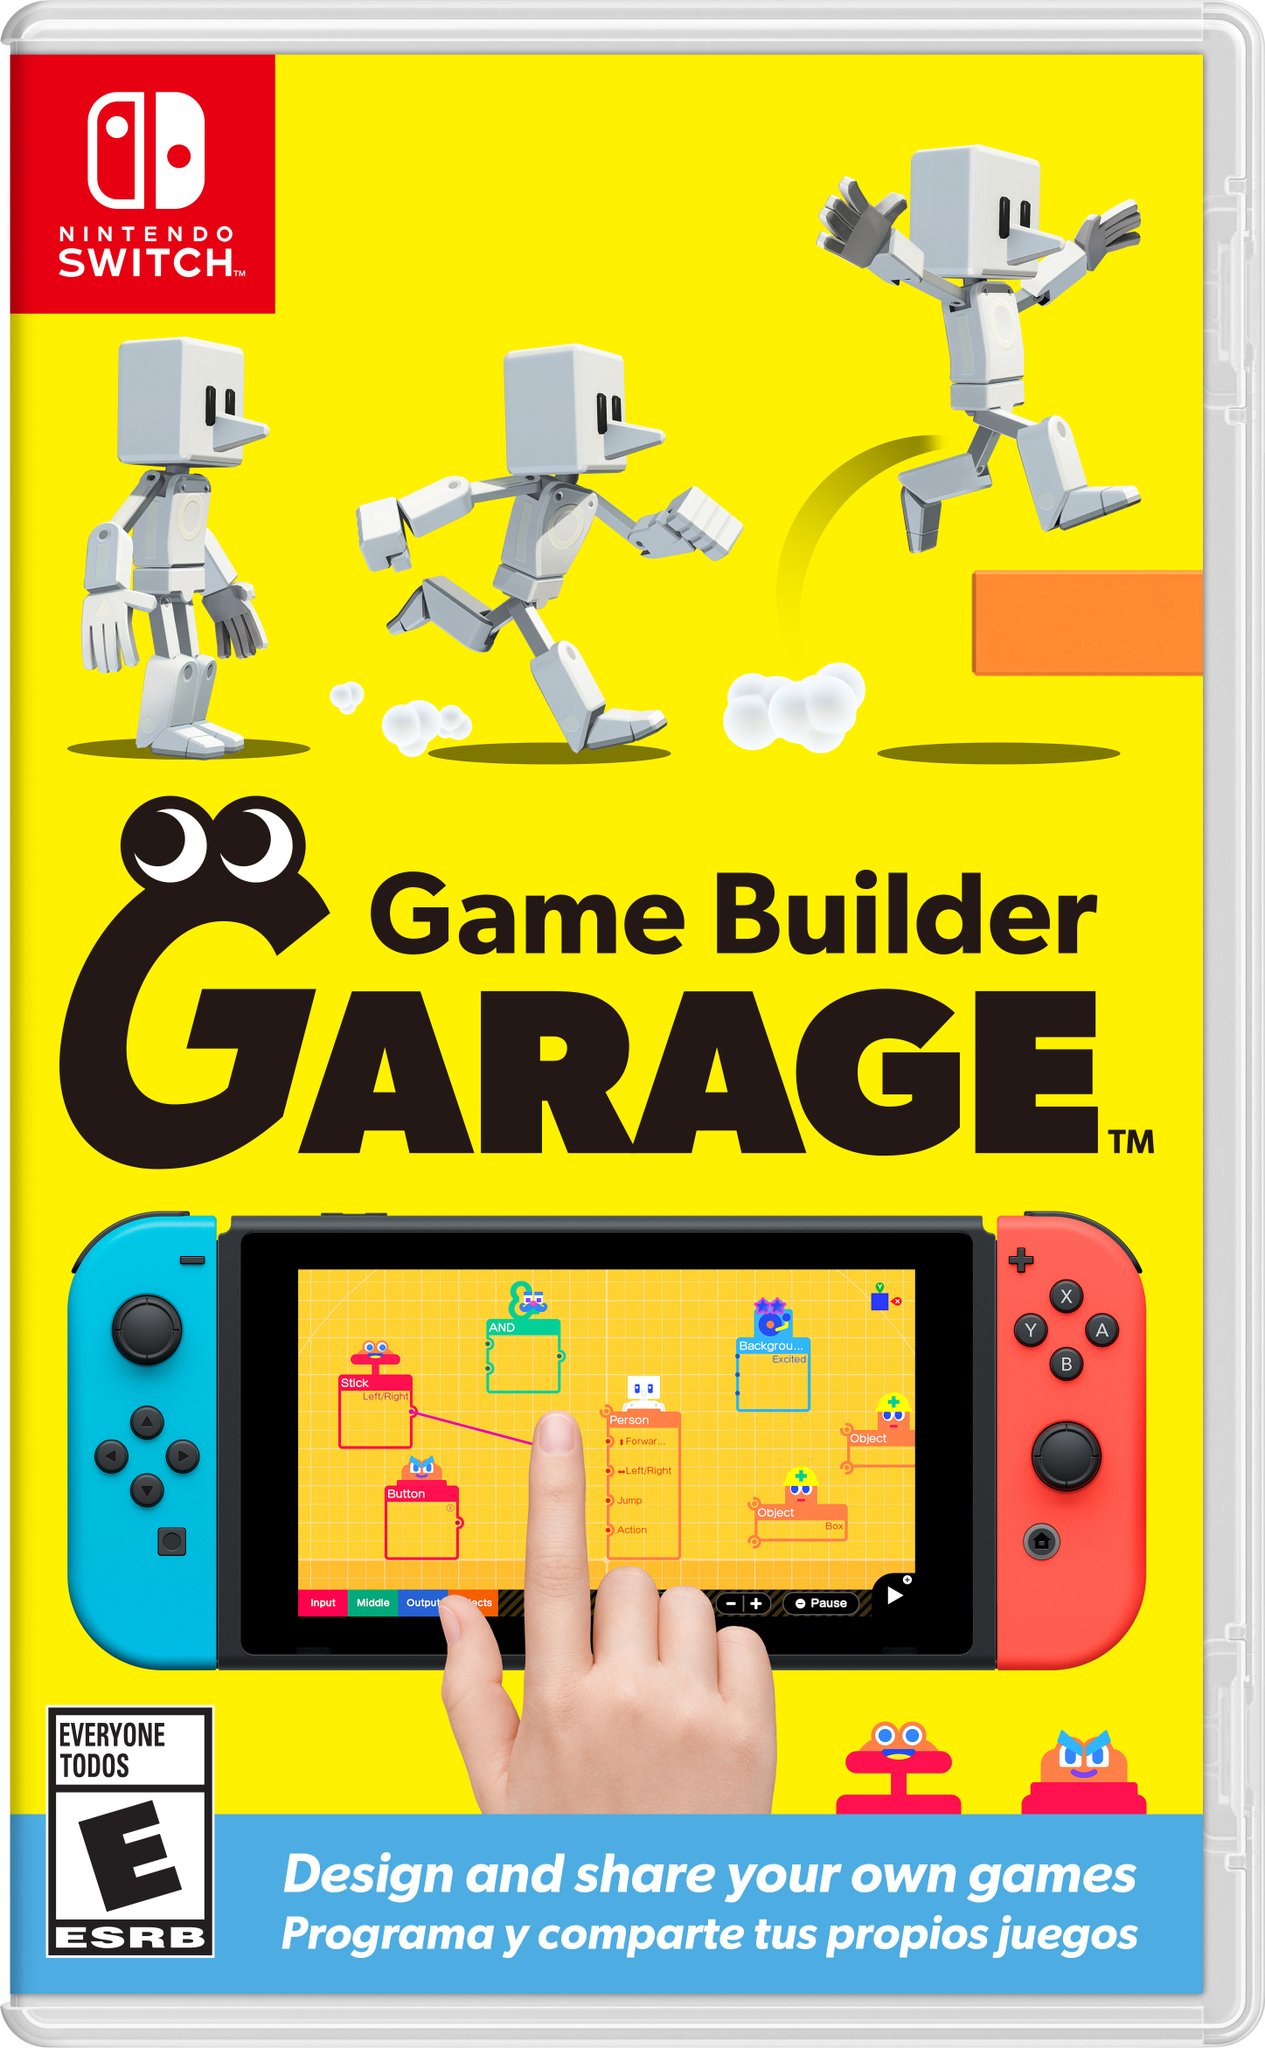 Game Bulider Garage boxart